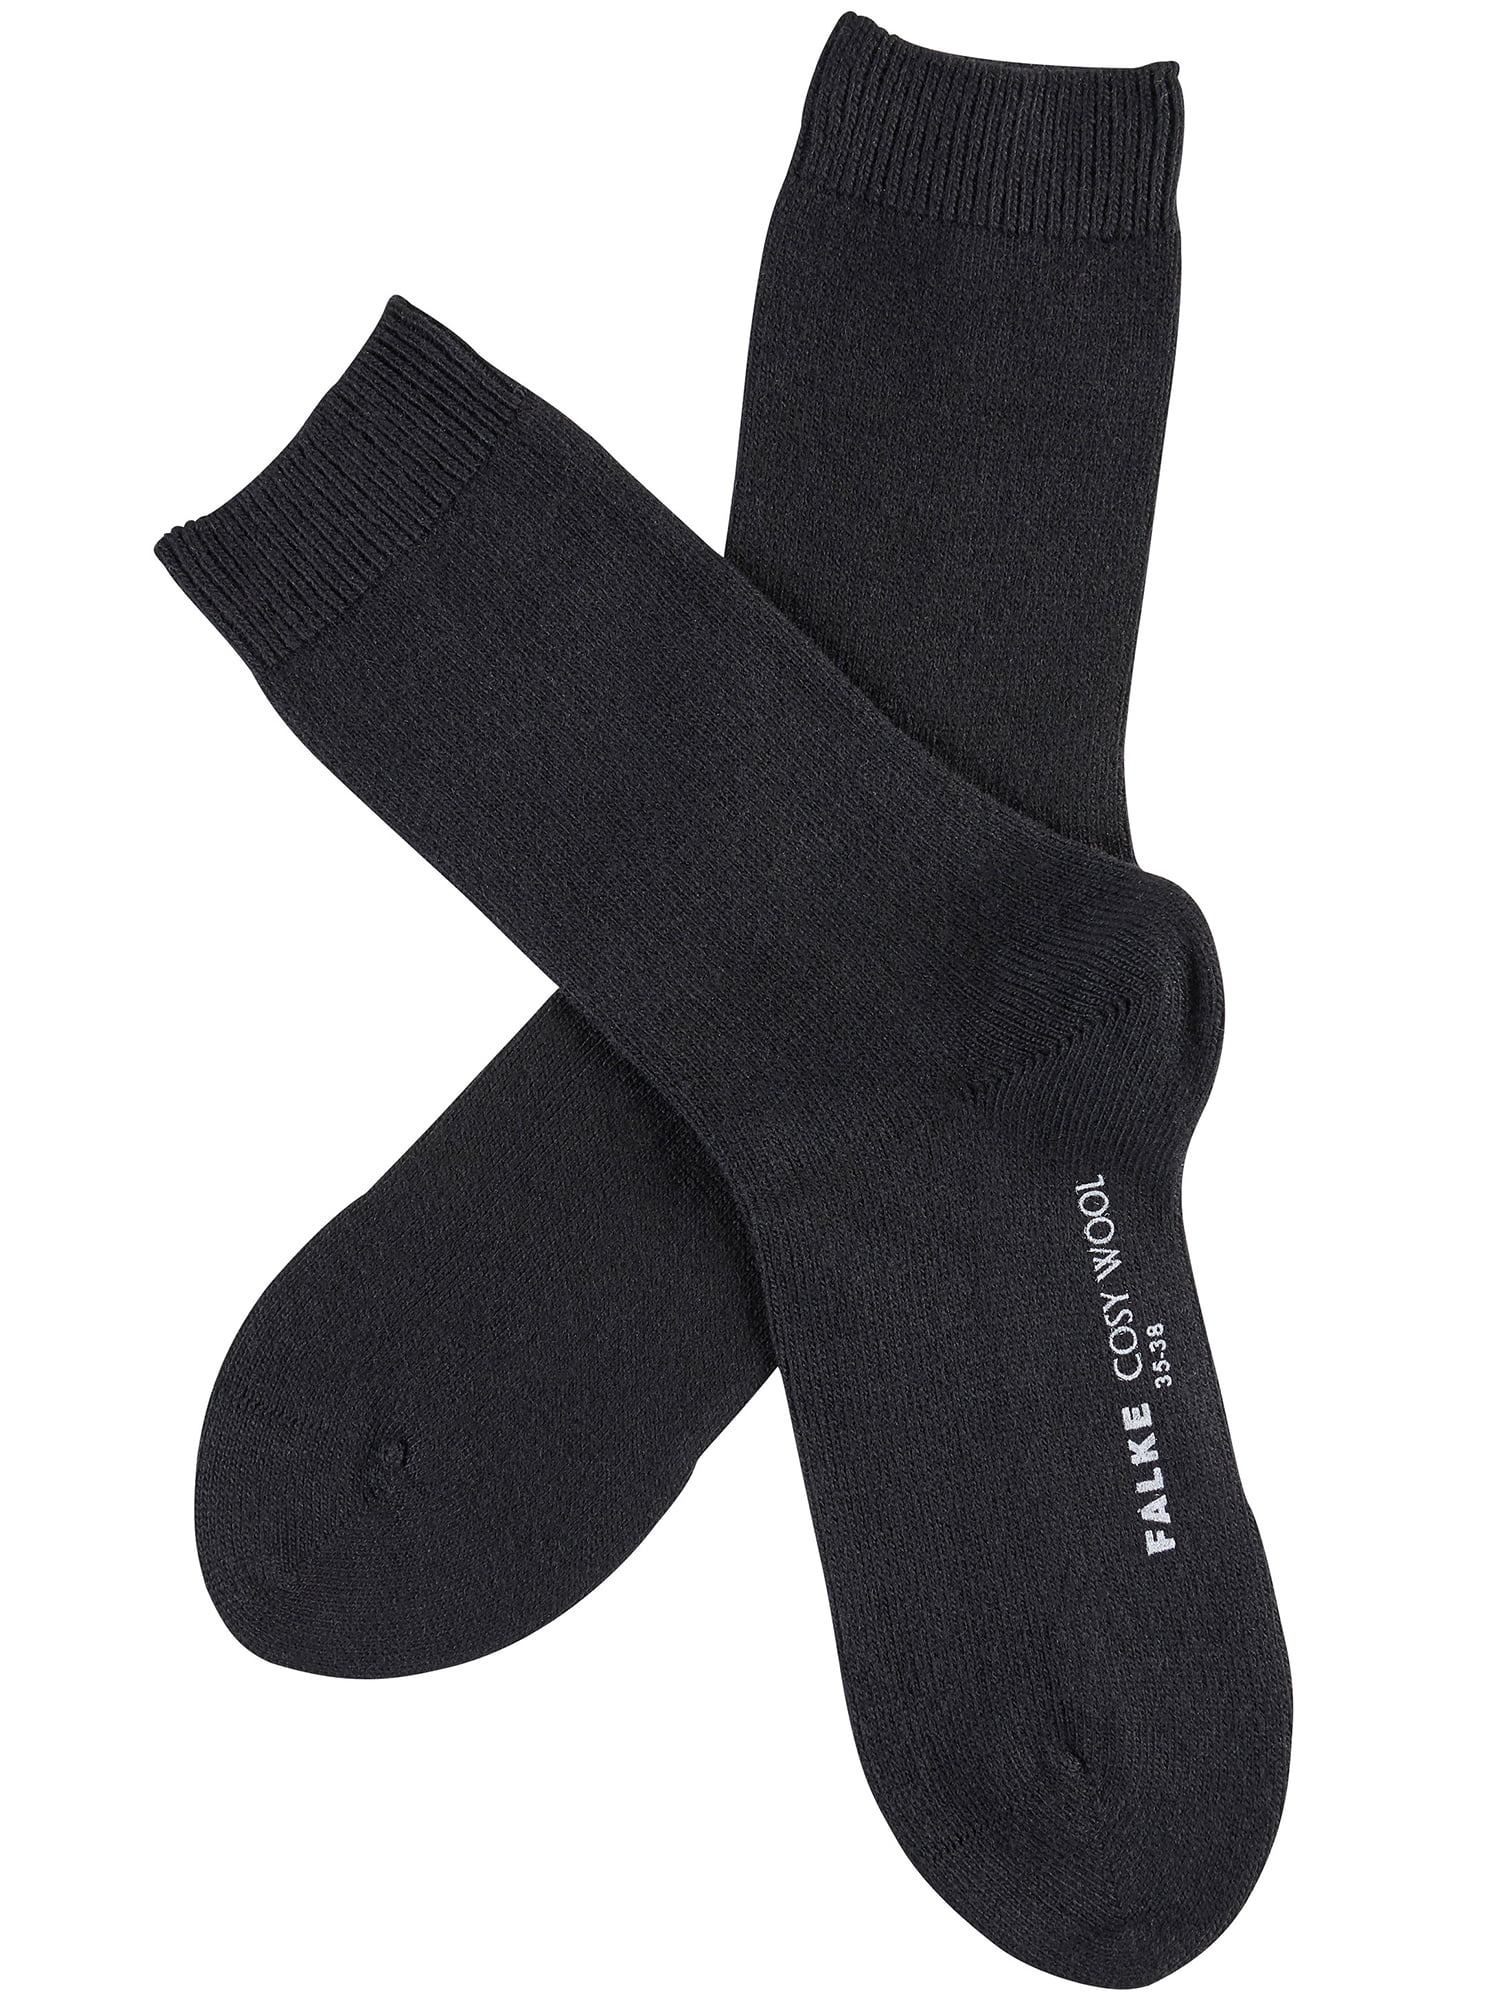 1 Pair Mens Plain Thermal Bed Socks Brushed Inside Sleepwear Adults Size 6-11 